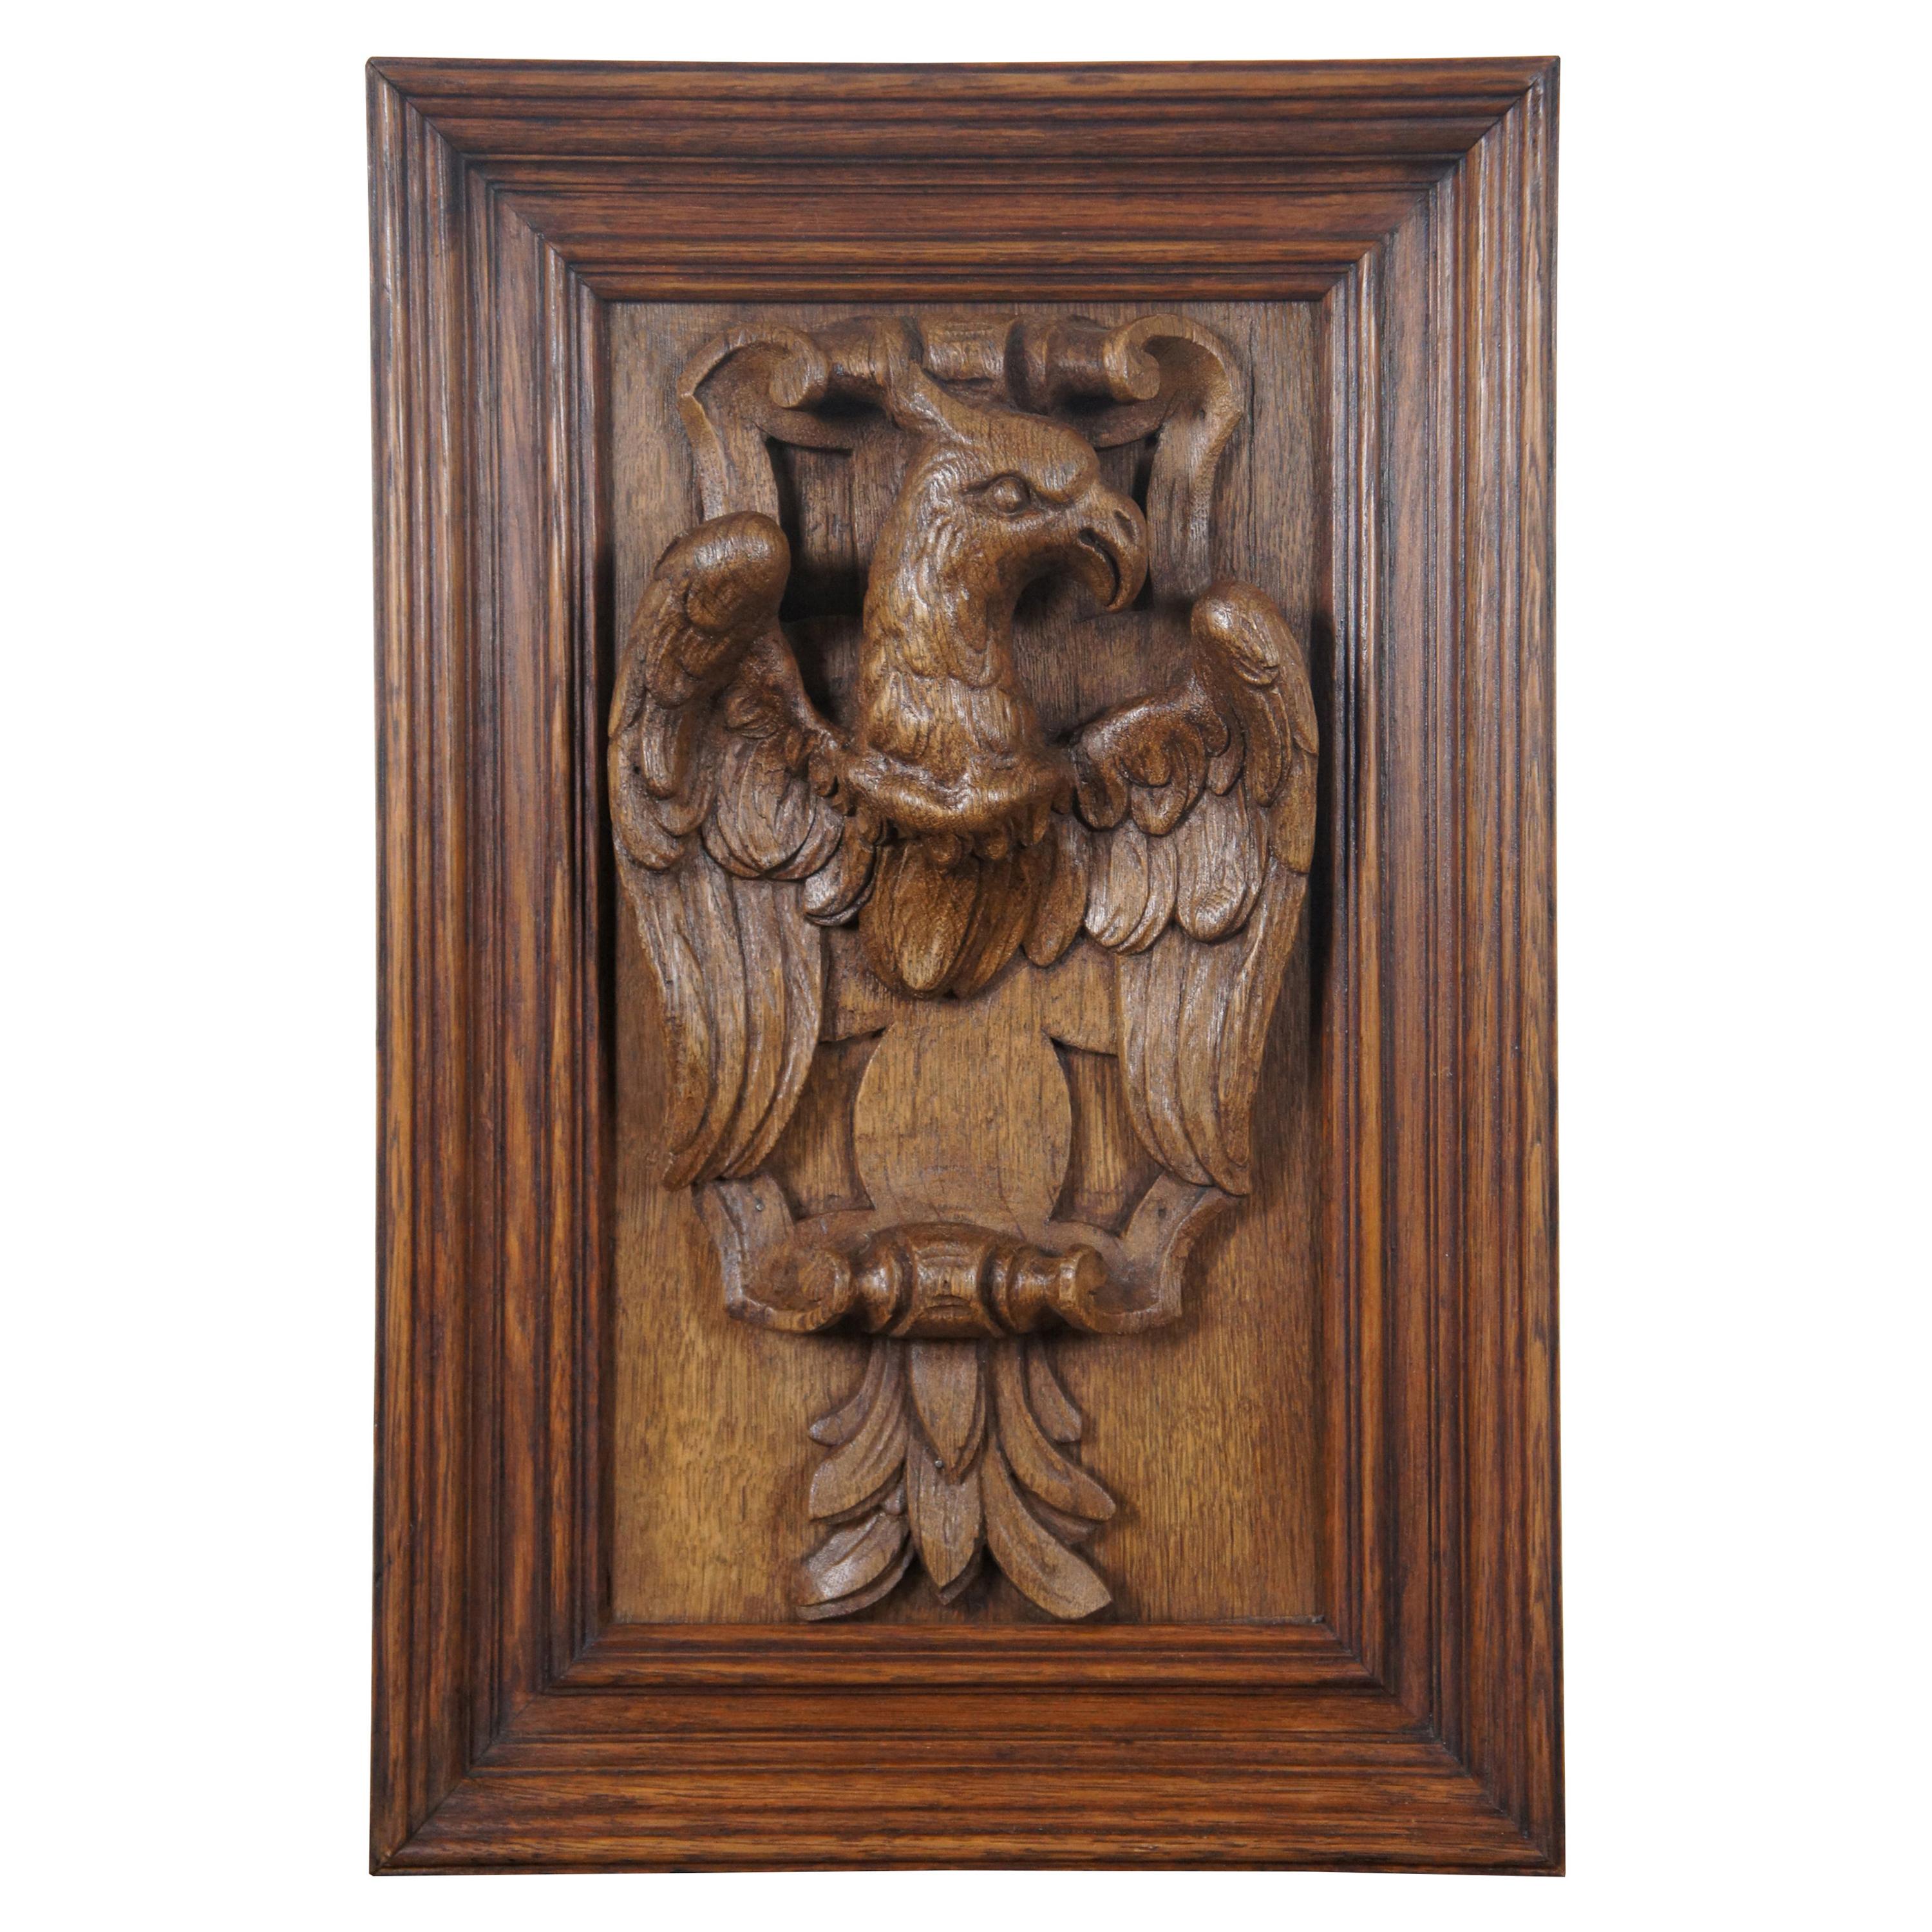 Antique Folk Art American Eagle Carved Oak Wall Plaque High Relief Heraldic